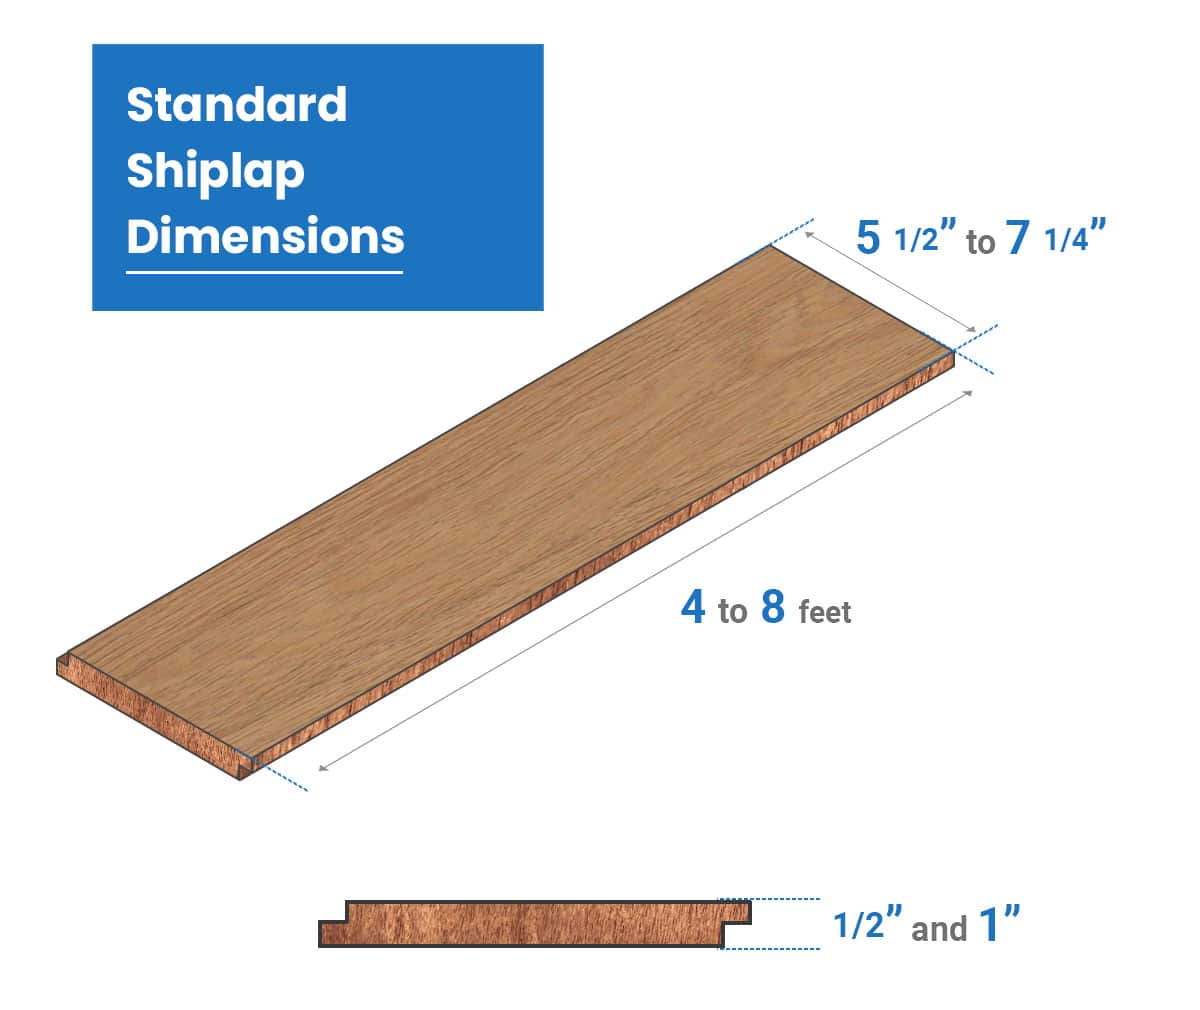 Standard shiplap dimensions